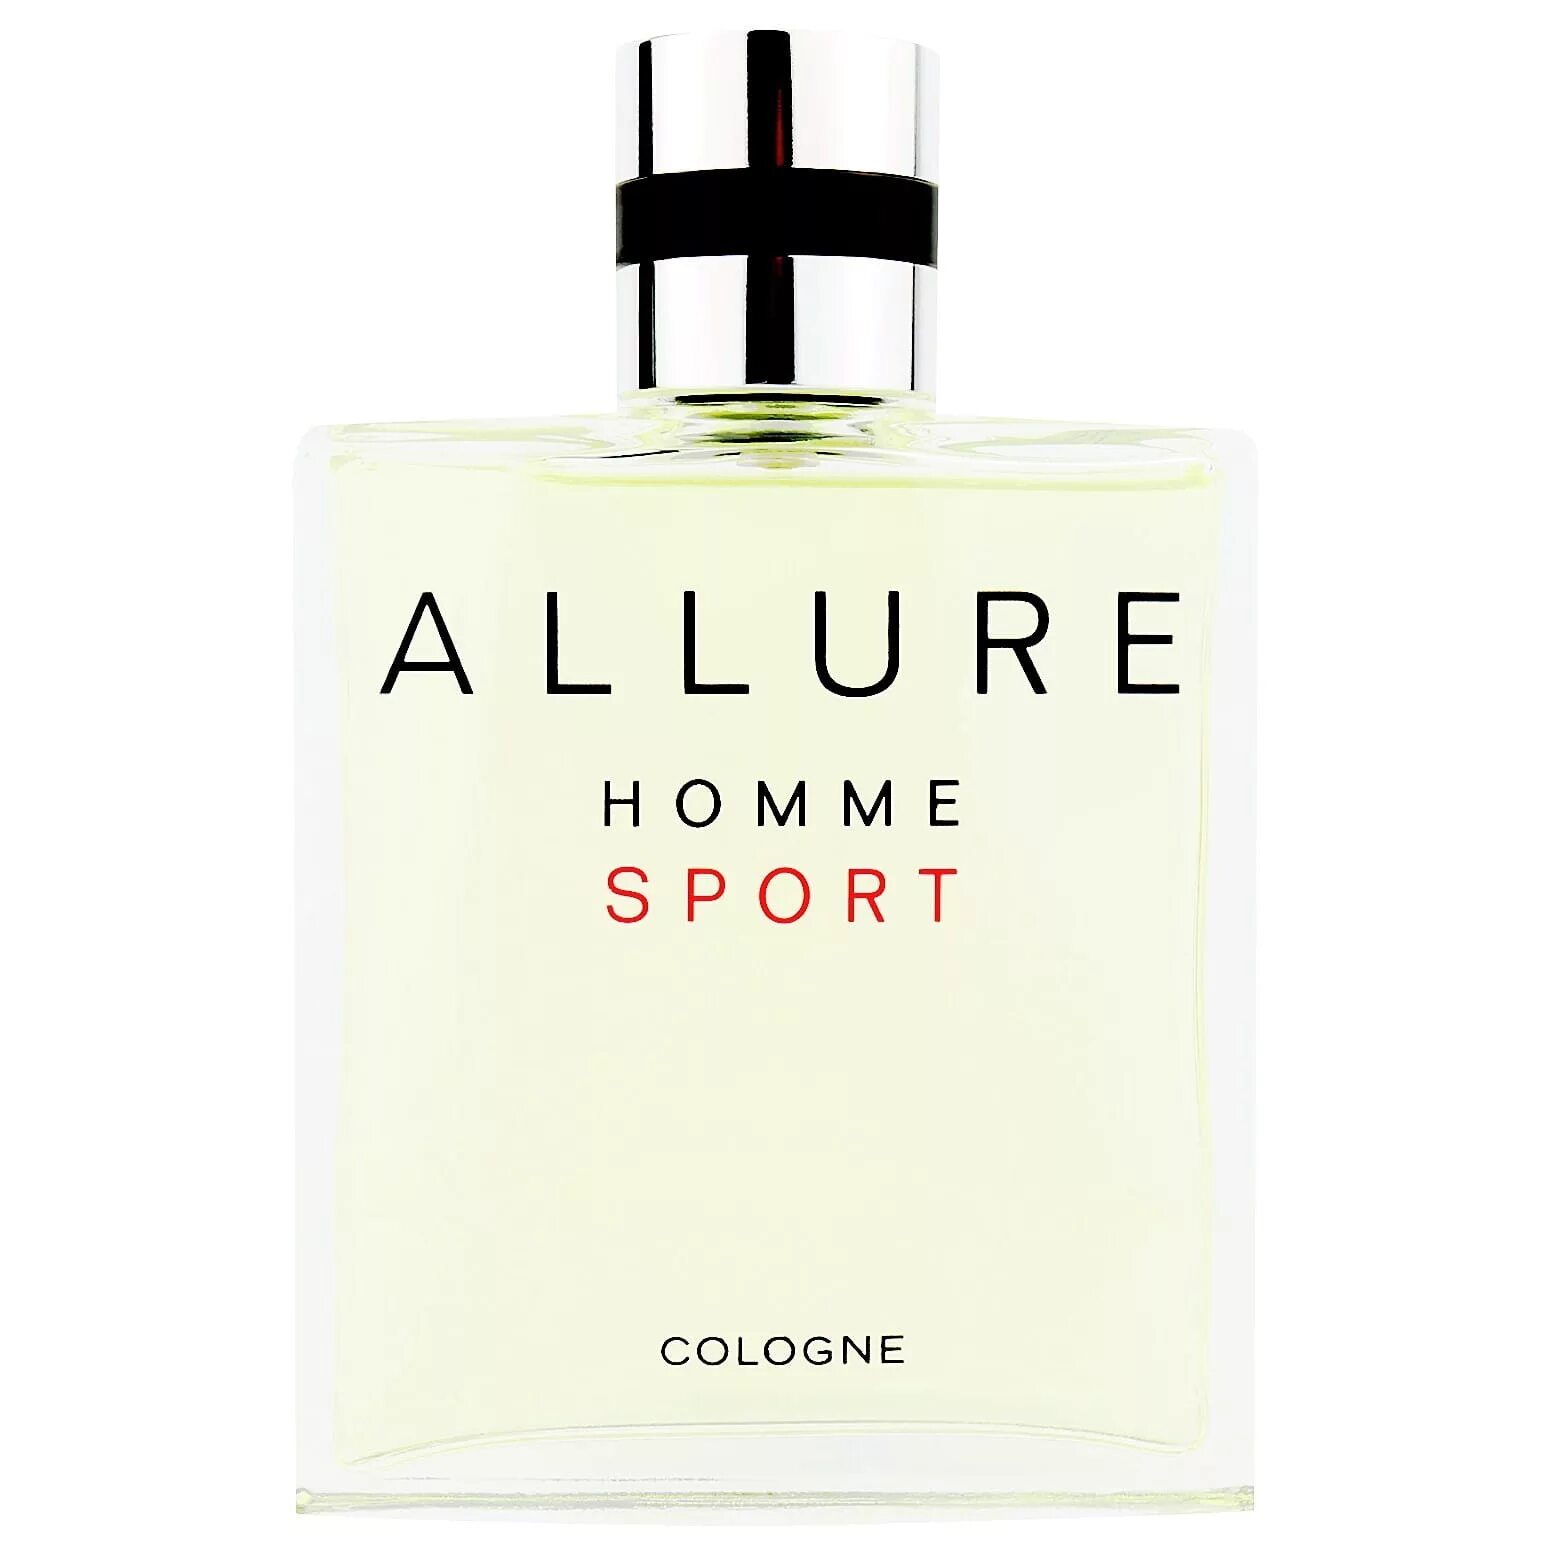 Chanel Allure Sport. Chanel Allure homme Sport. Chanel Allure homme Sport Cologne. Chanel Allure homme Sport Cologne 100 ml. Allure sport cologne